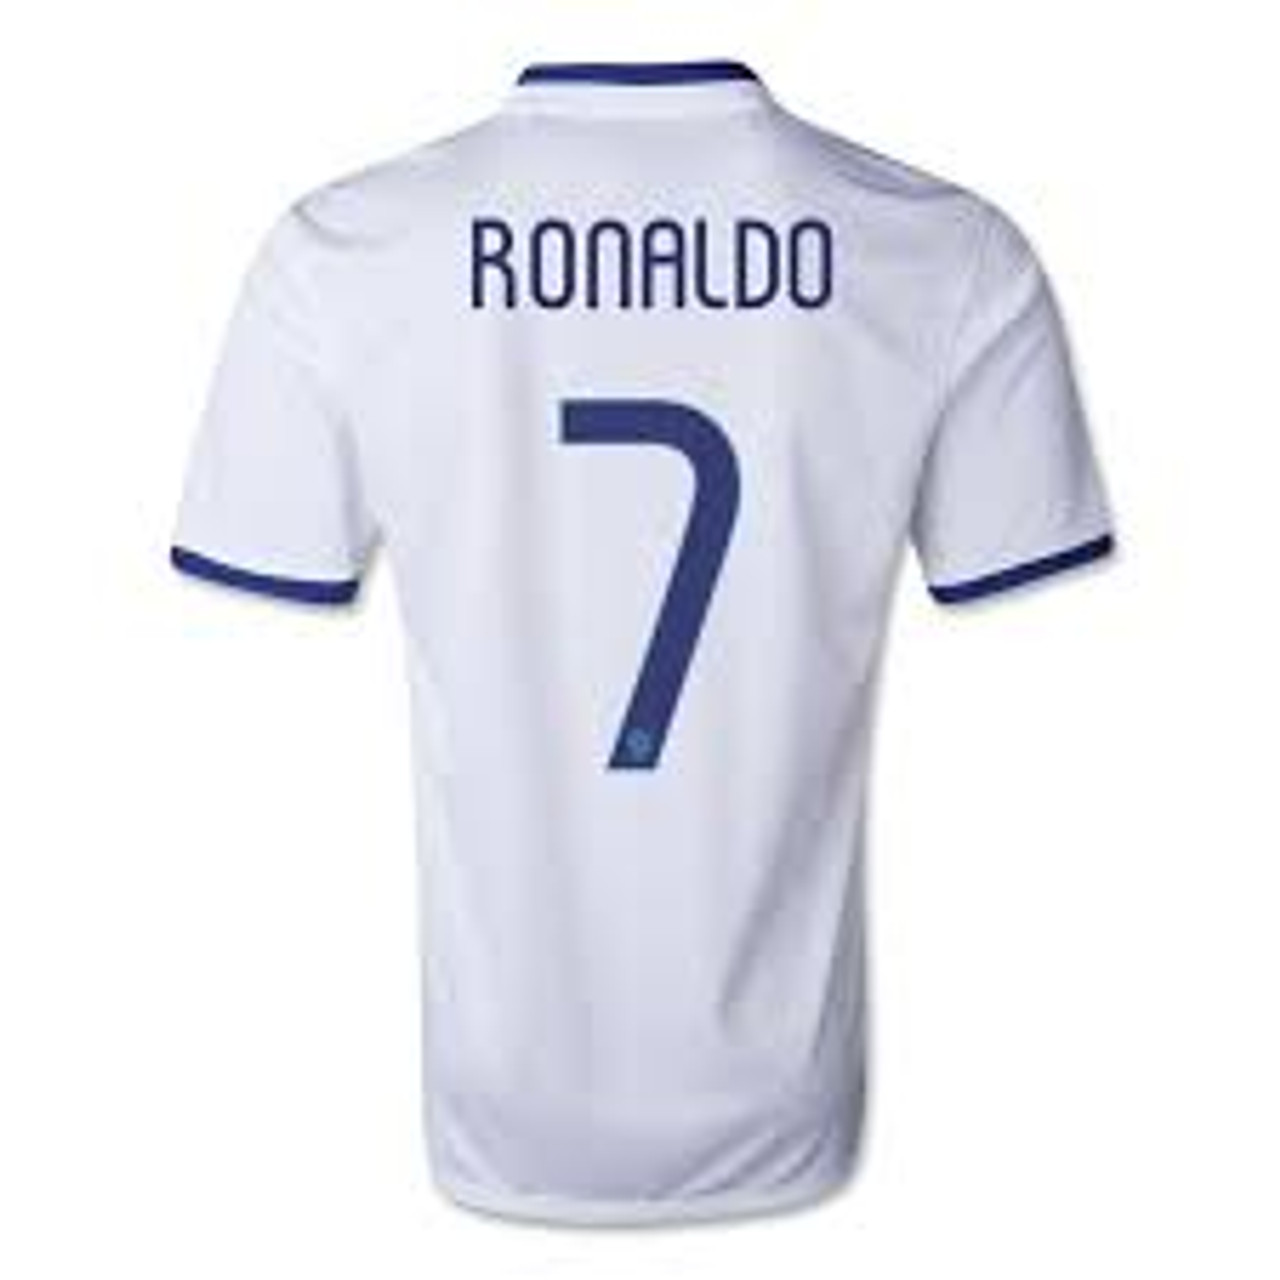 ronaldo white jersey